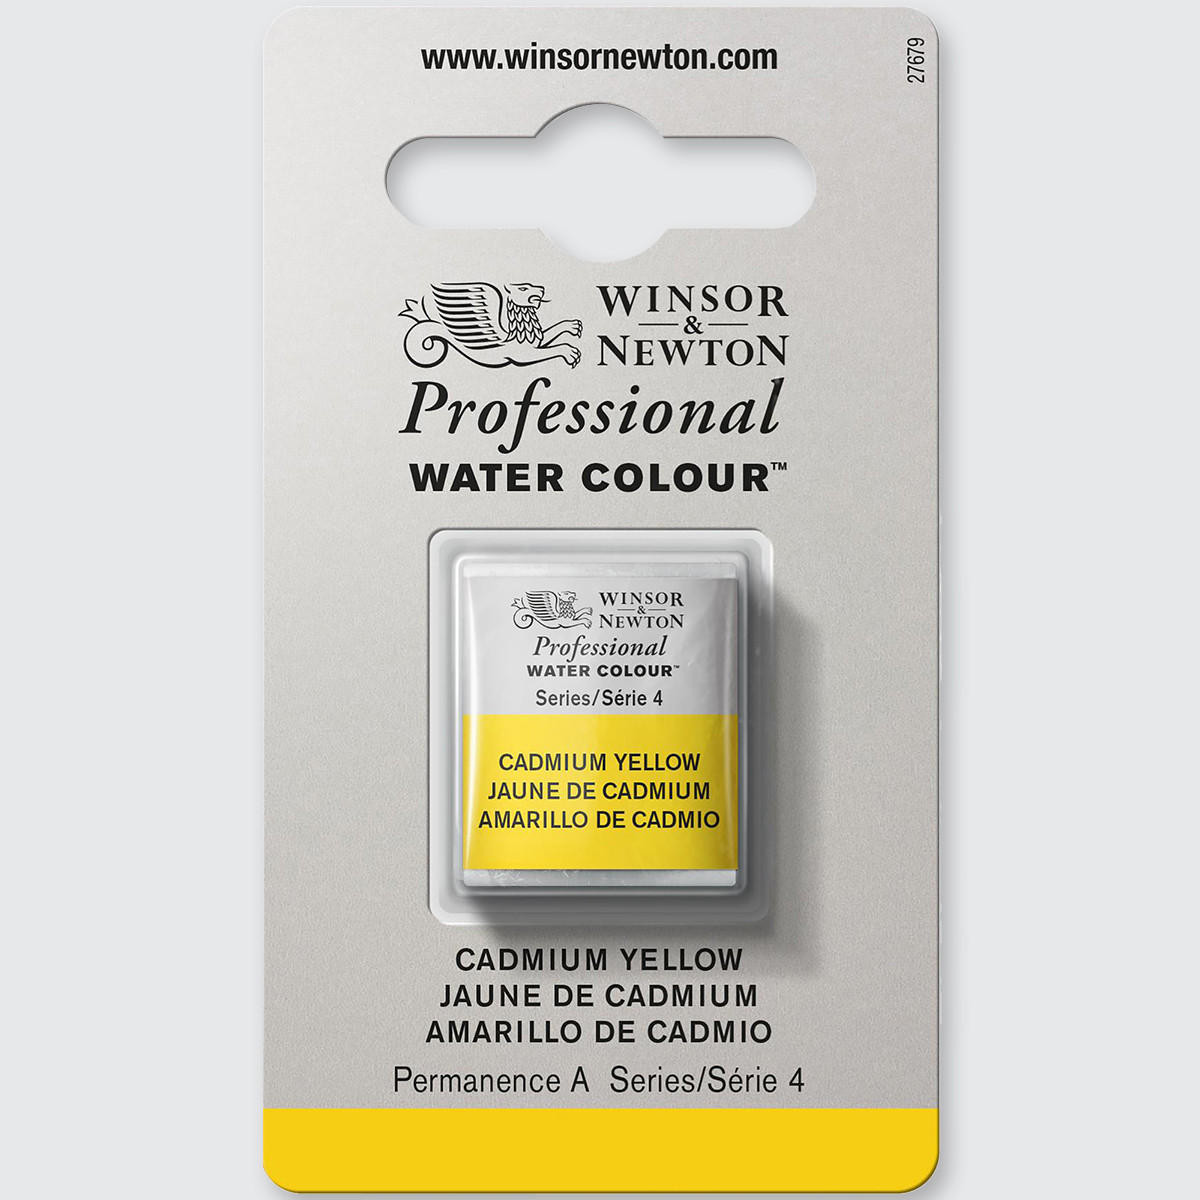 Winsor & Newton Professional Water Colour Half Pan Cadmium Yellow